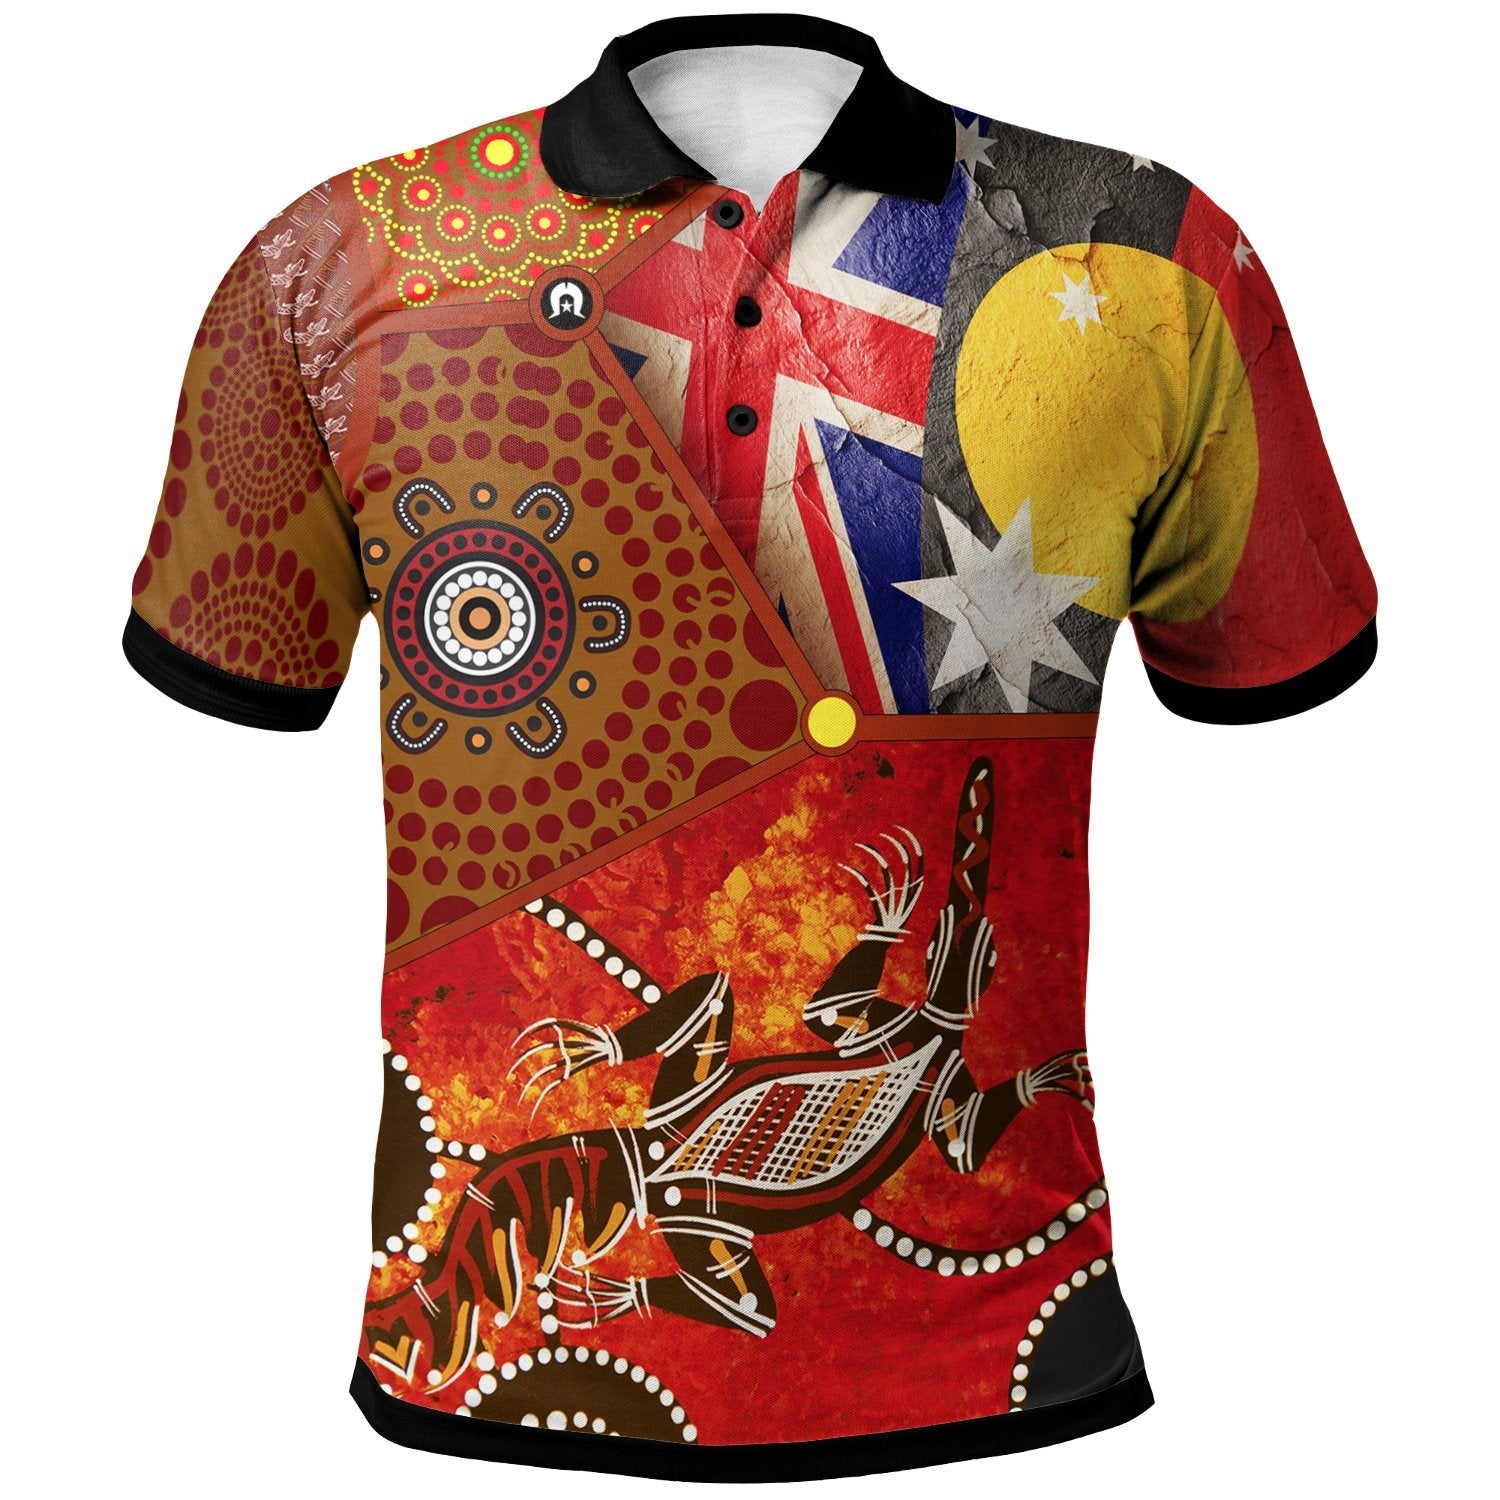 polo-shirt-aboriginal-dot-patterns-flags-crocodile